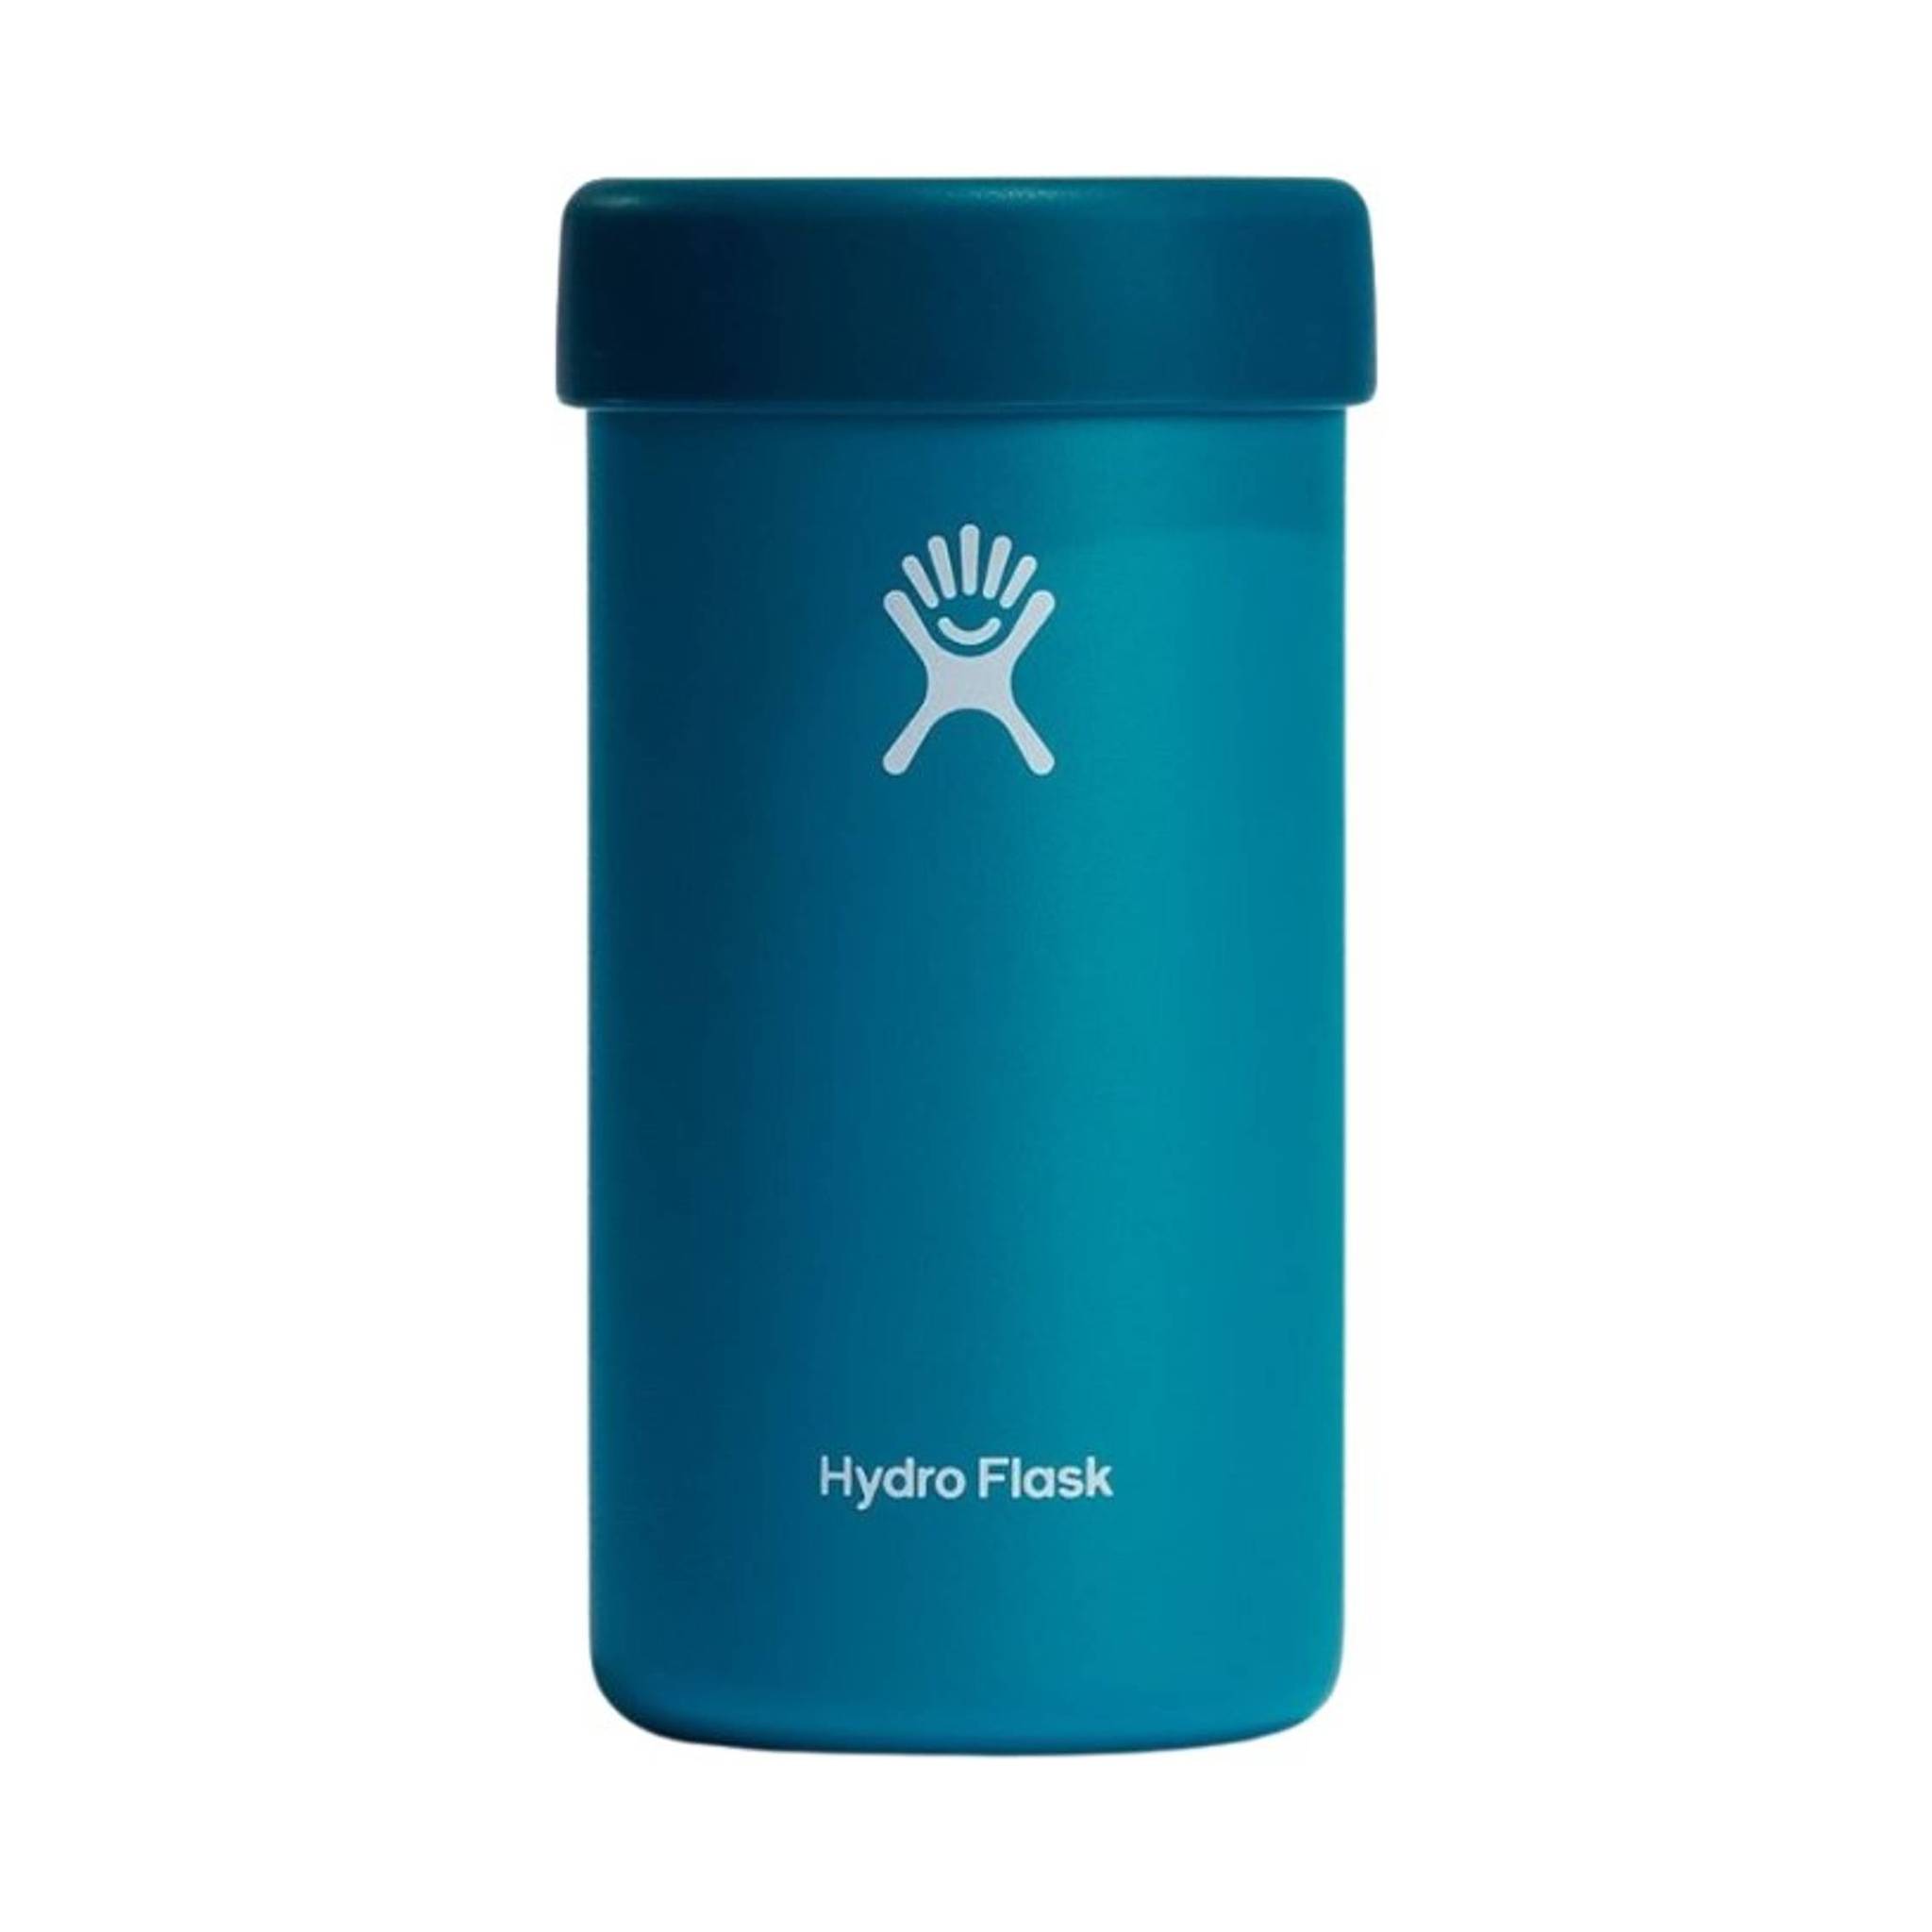 Hydroflask Cooler Cup Barware